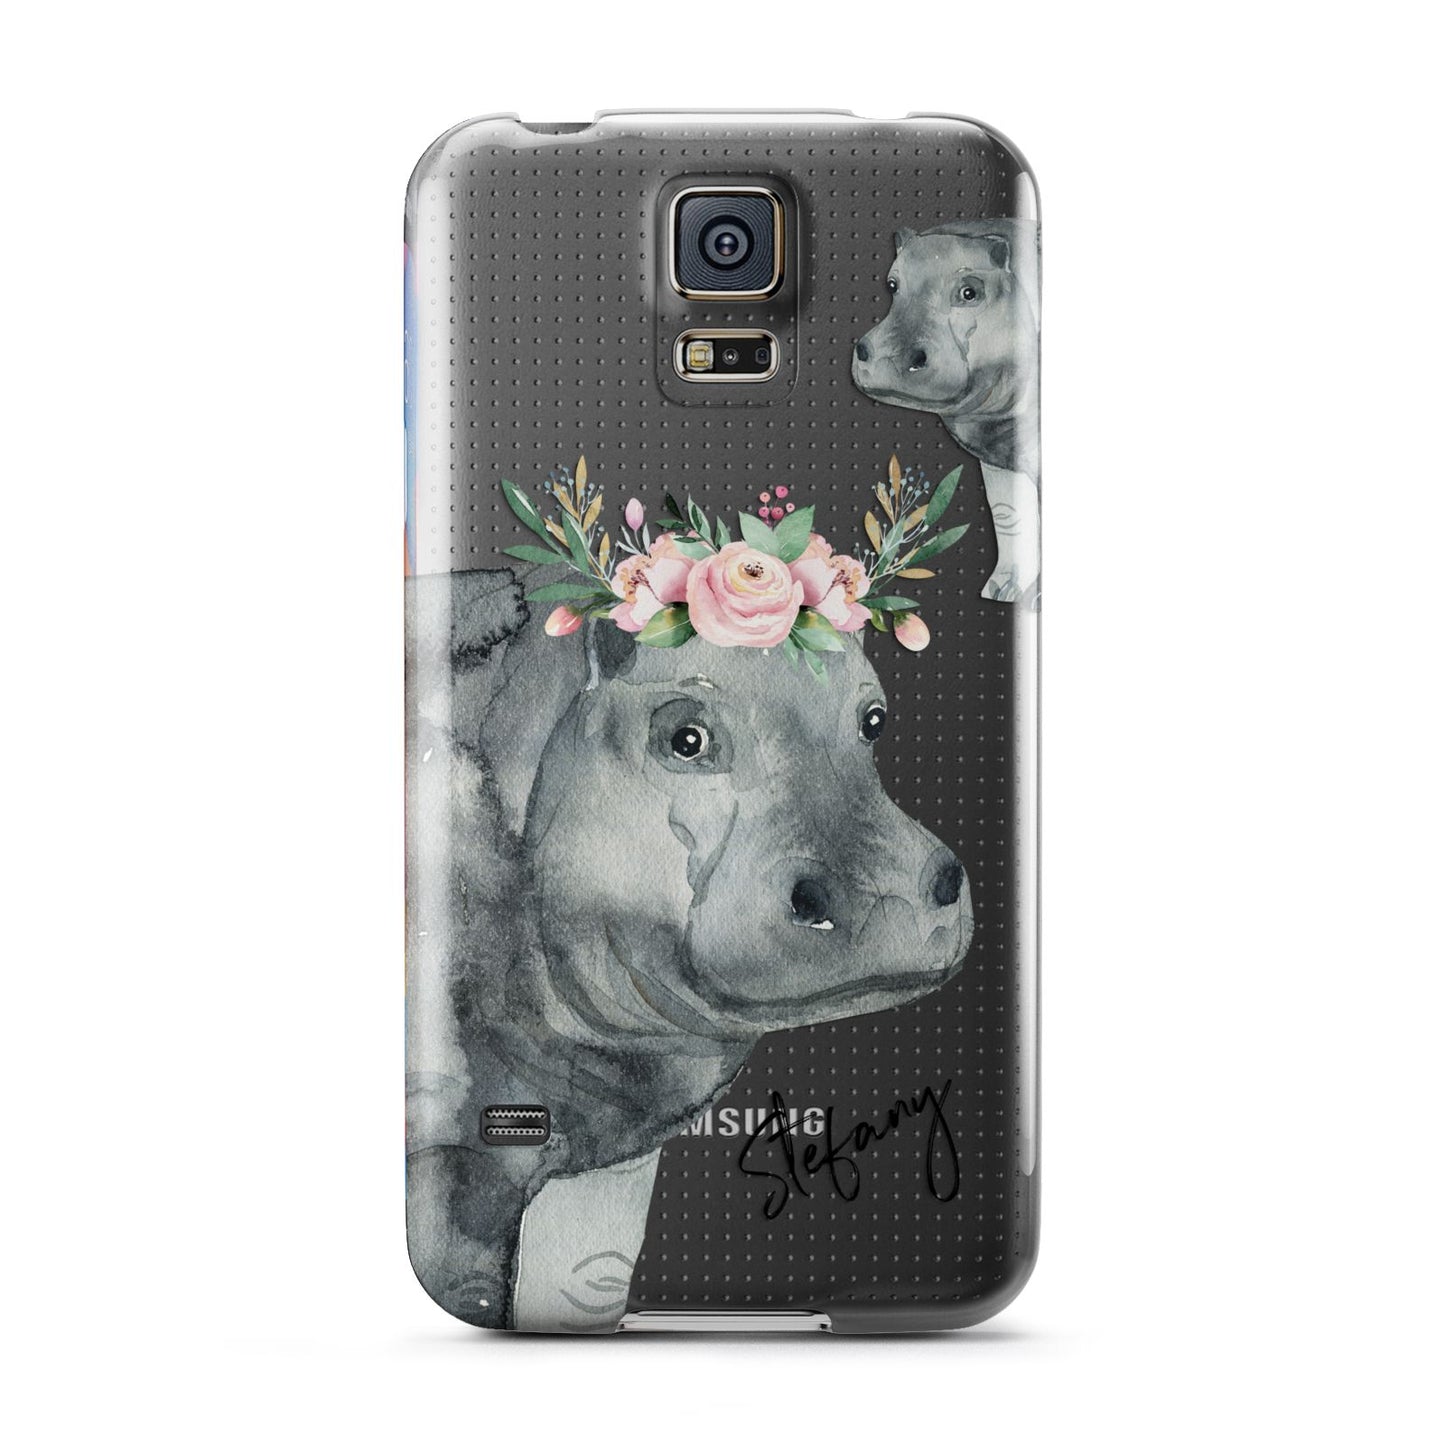 Personalised Hippopotamus Samsung Galaxy S5 Case